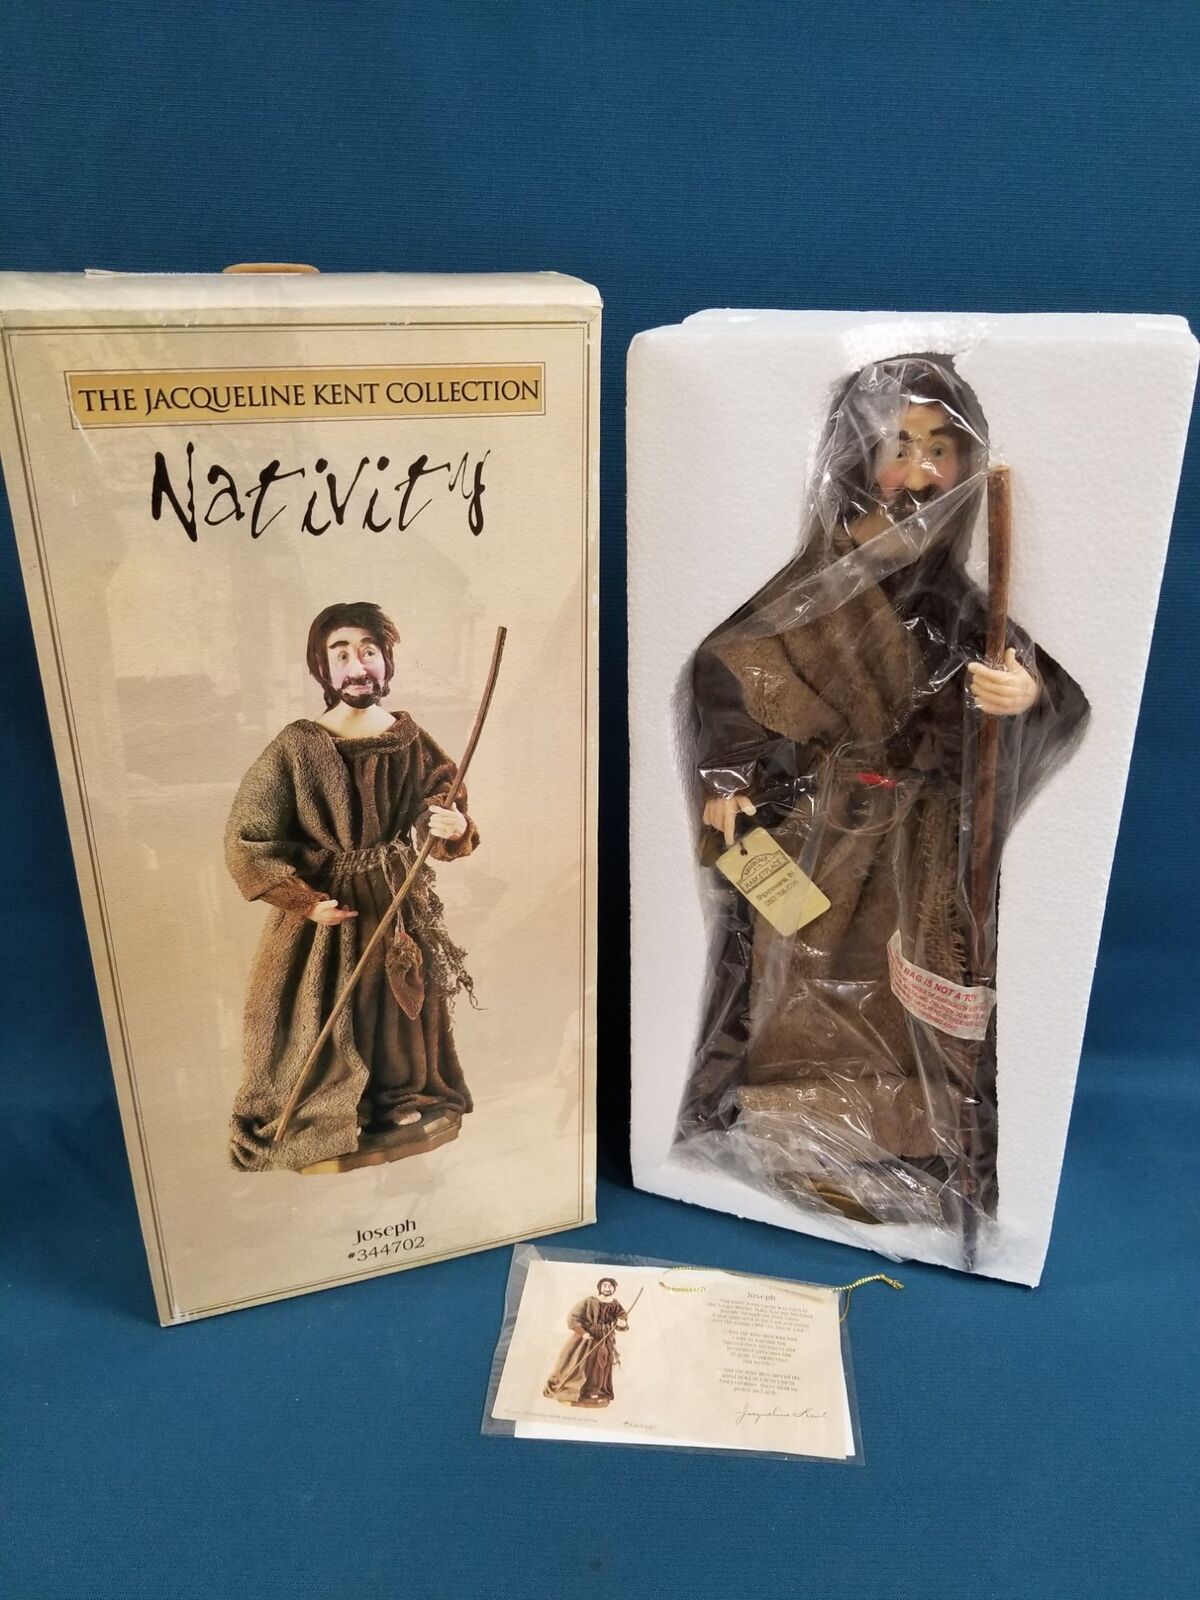 NIOB Jacqueline Kent Collection Nativity Joseph Christmas Doll #344702